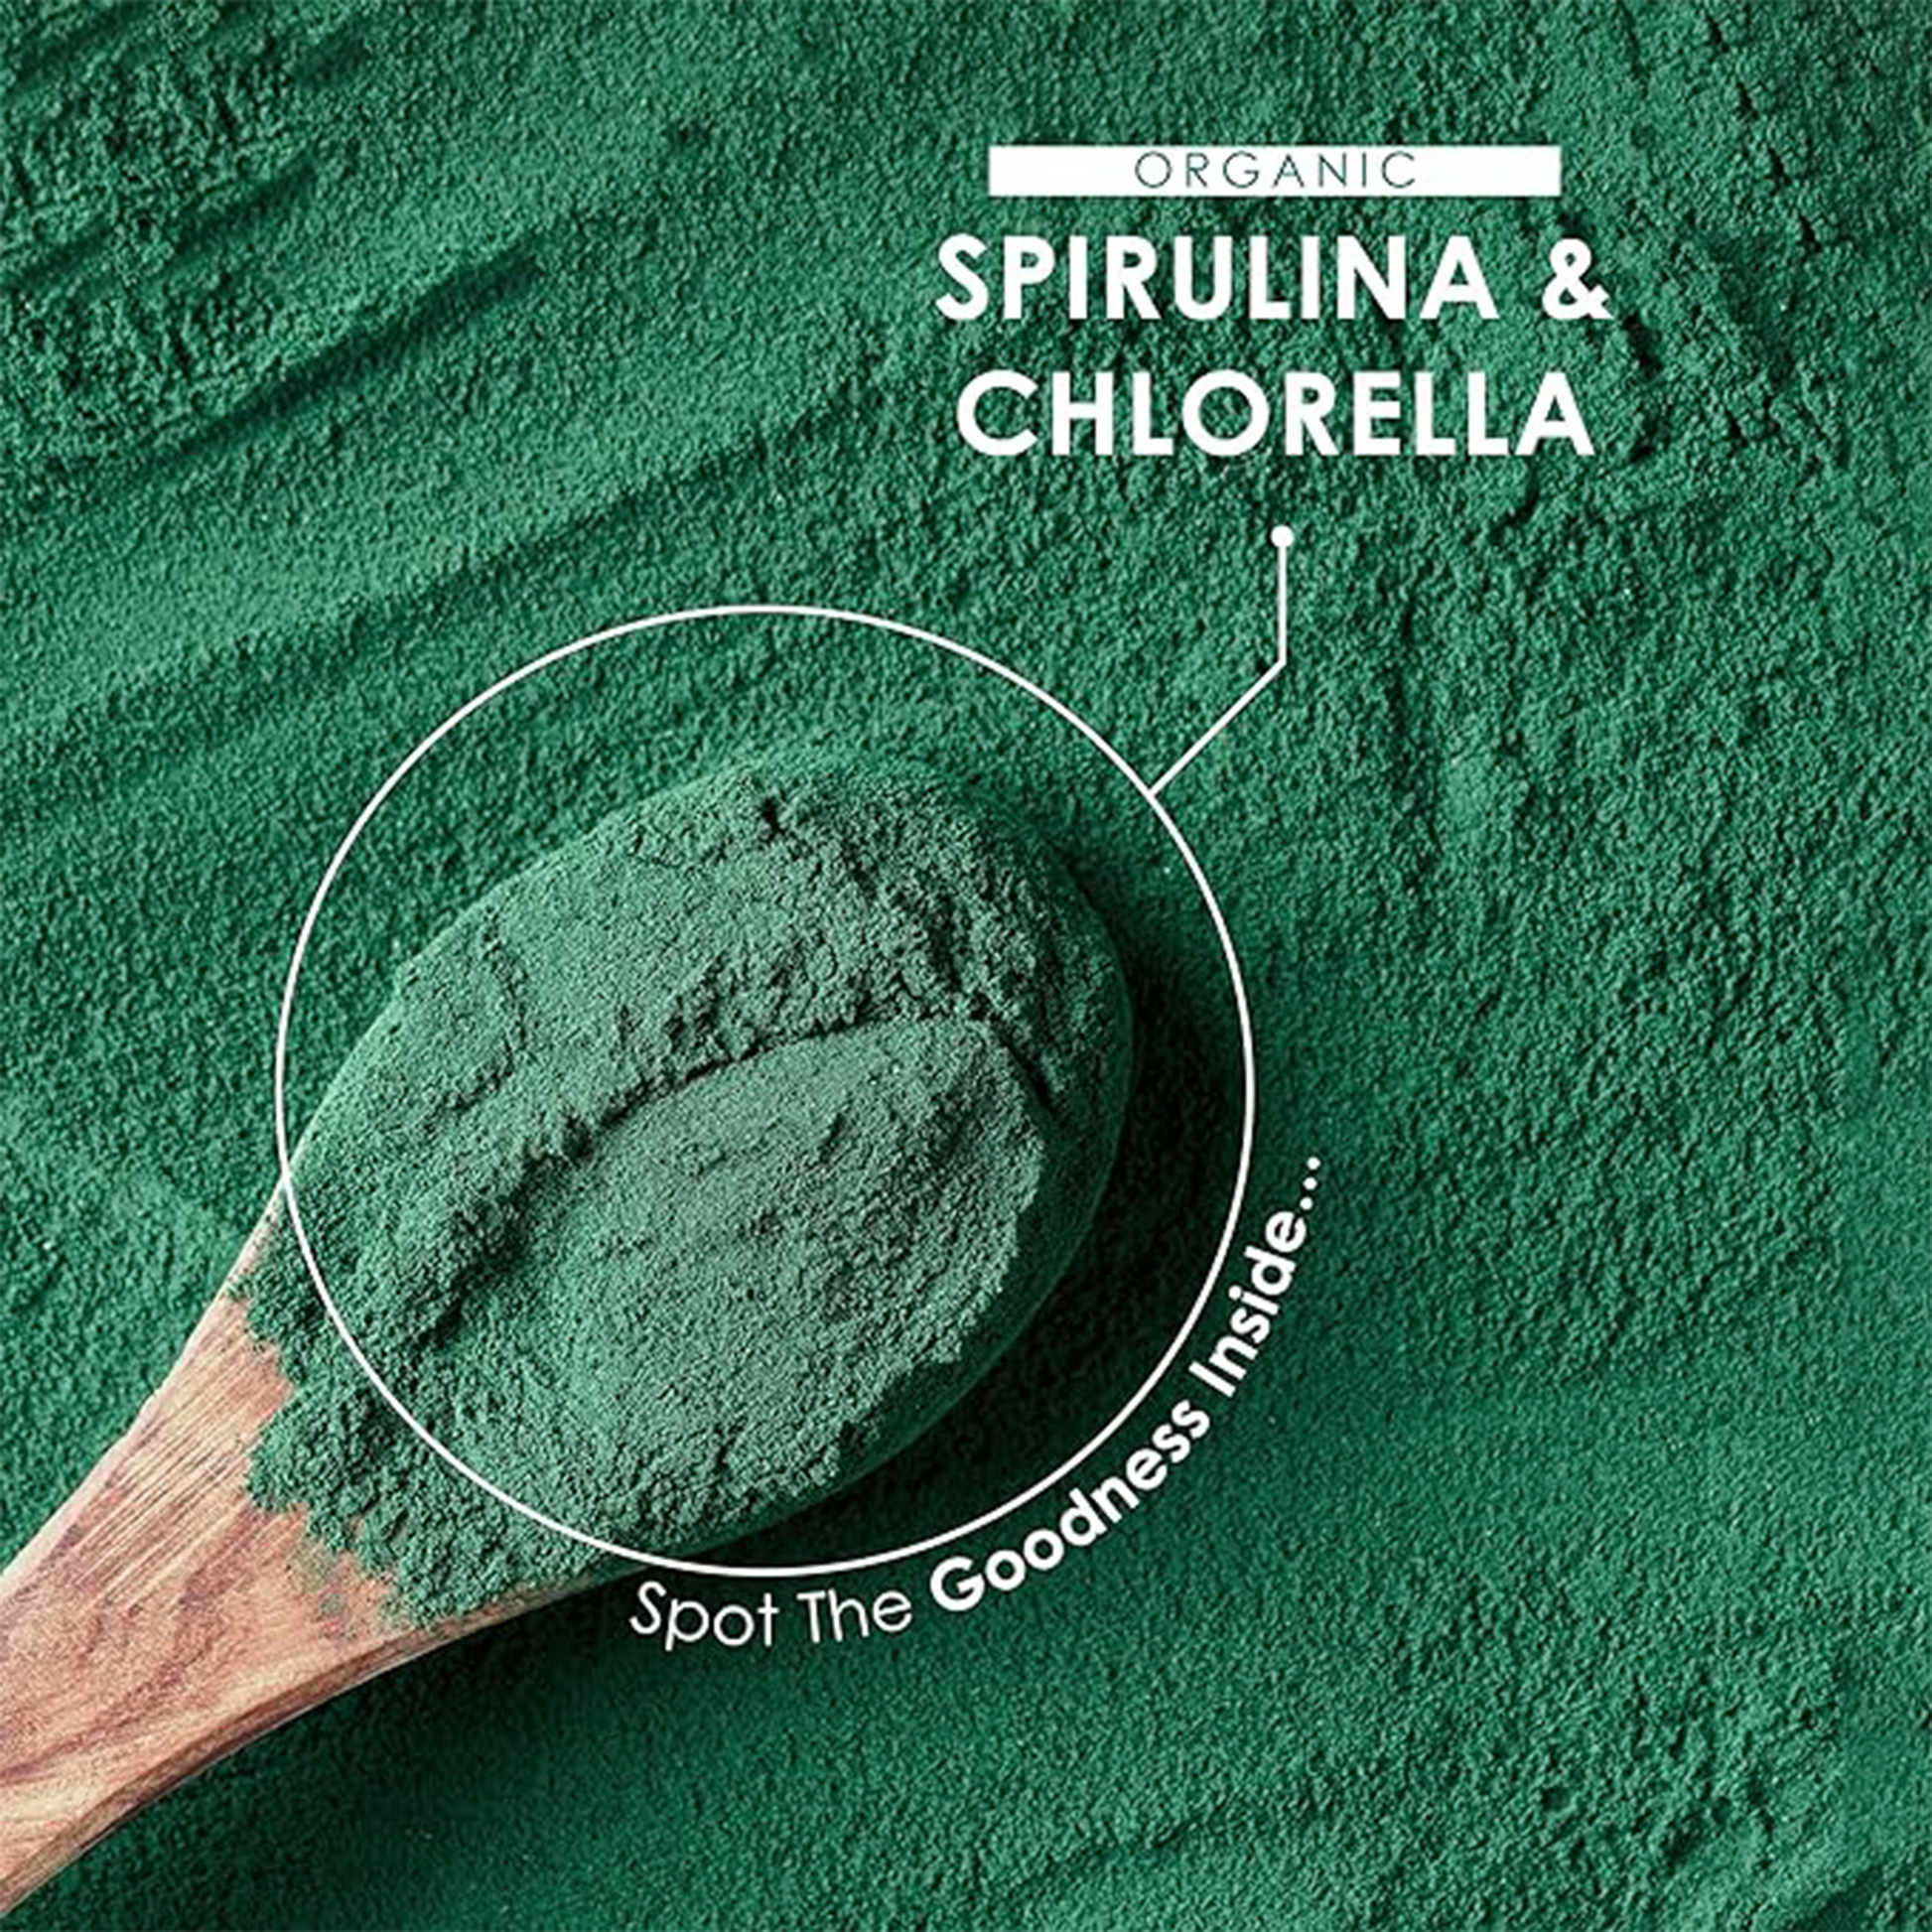 Spirulina + Chlorella powder